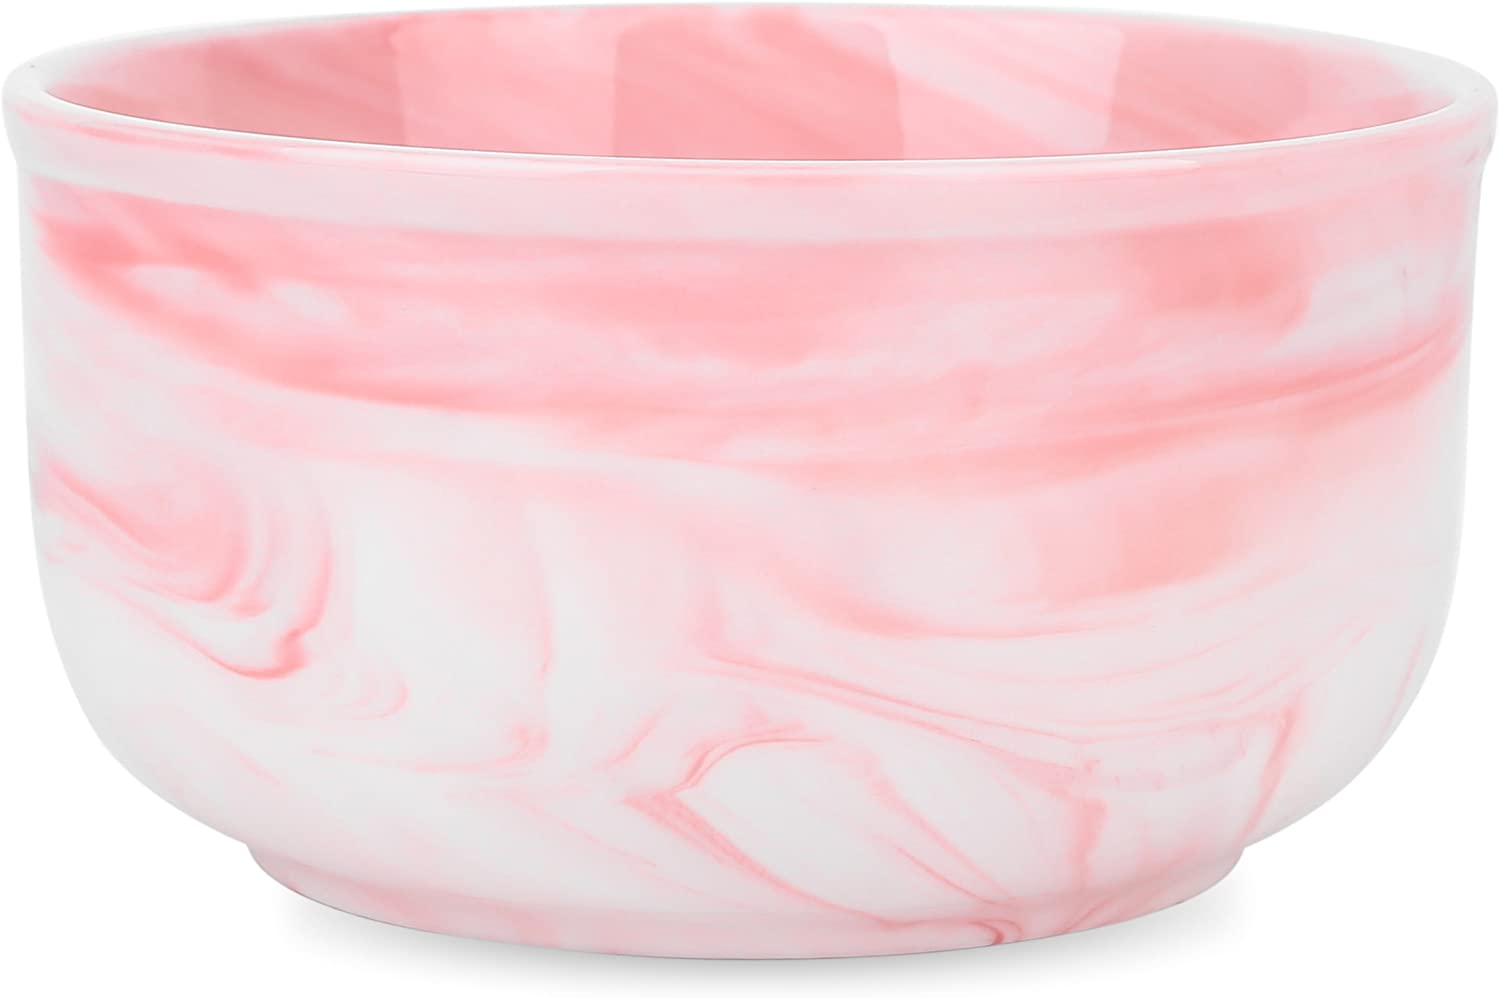 vancasso Set of 3 porcelain bowls in 3 sizes, soup bowls, cereal bowls, snack bowls, dip bowls, diameter 15/12/9.4 cm, spiral decoration, pink